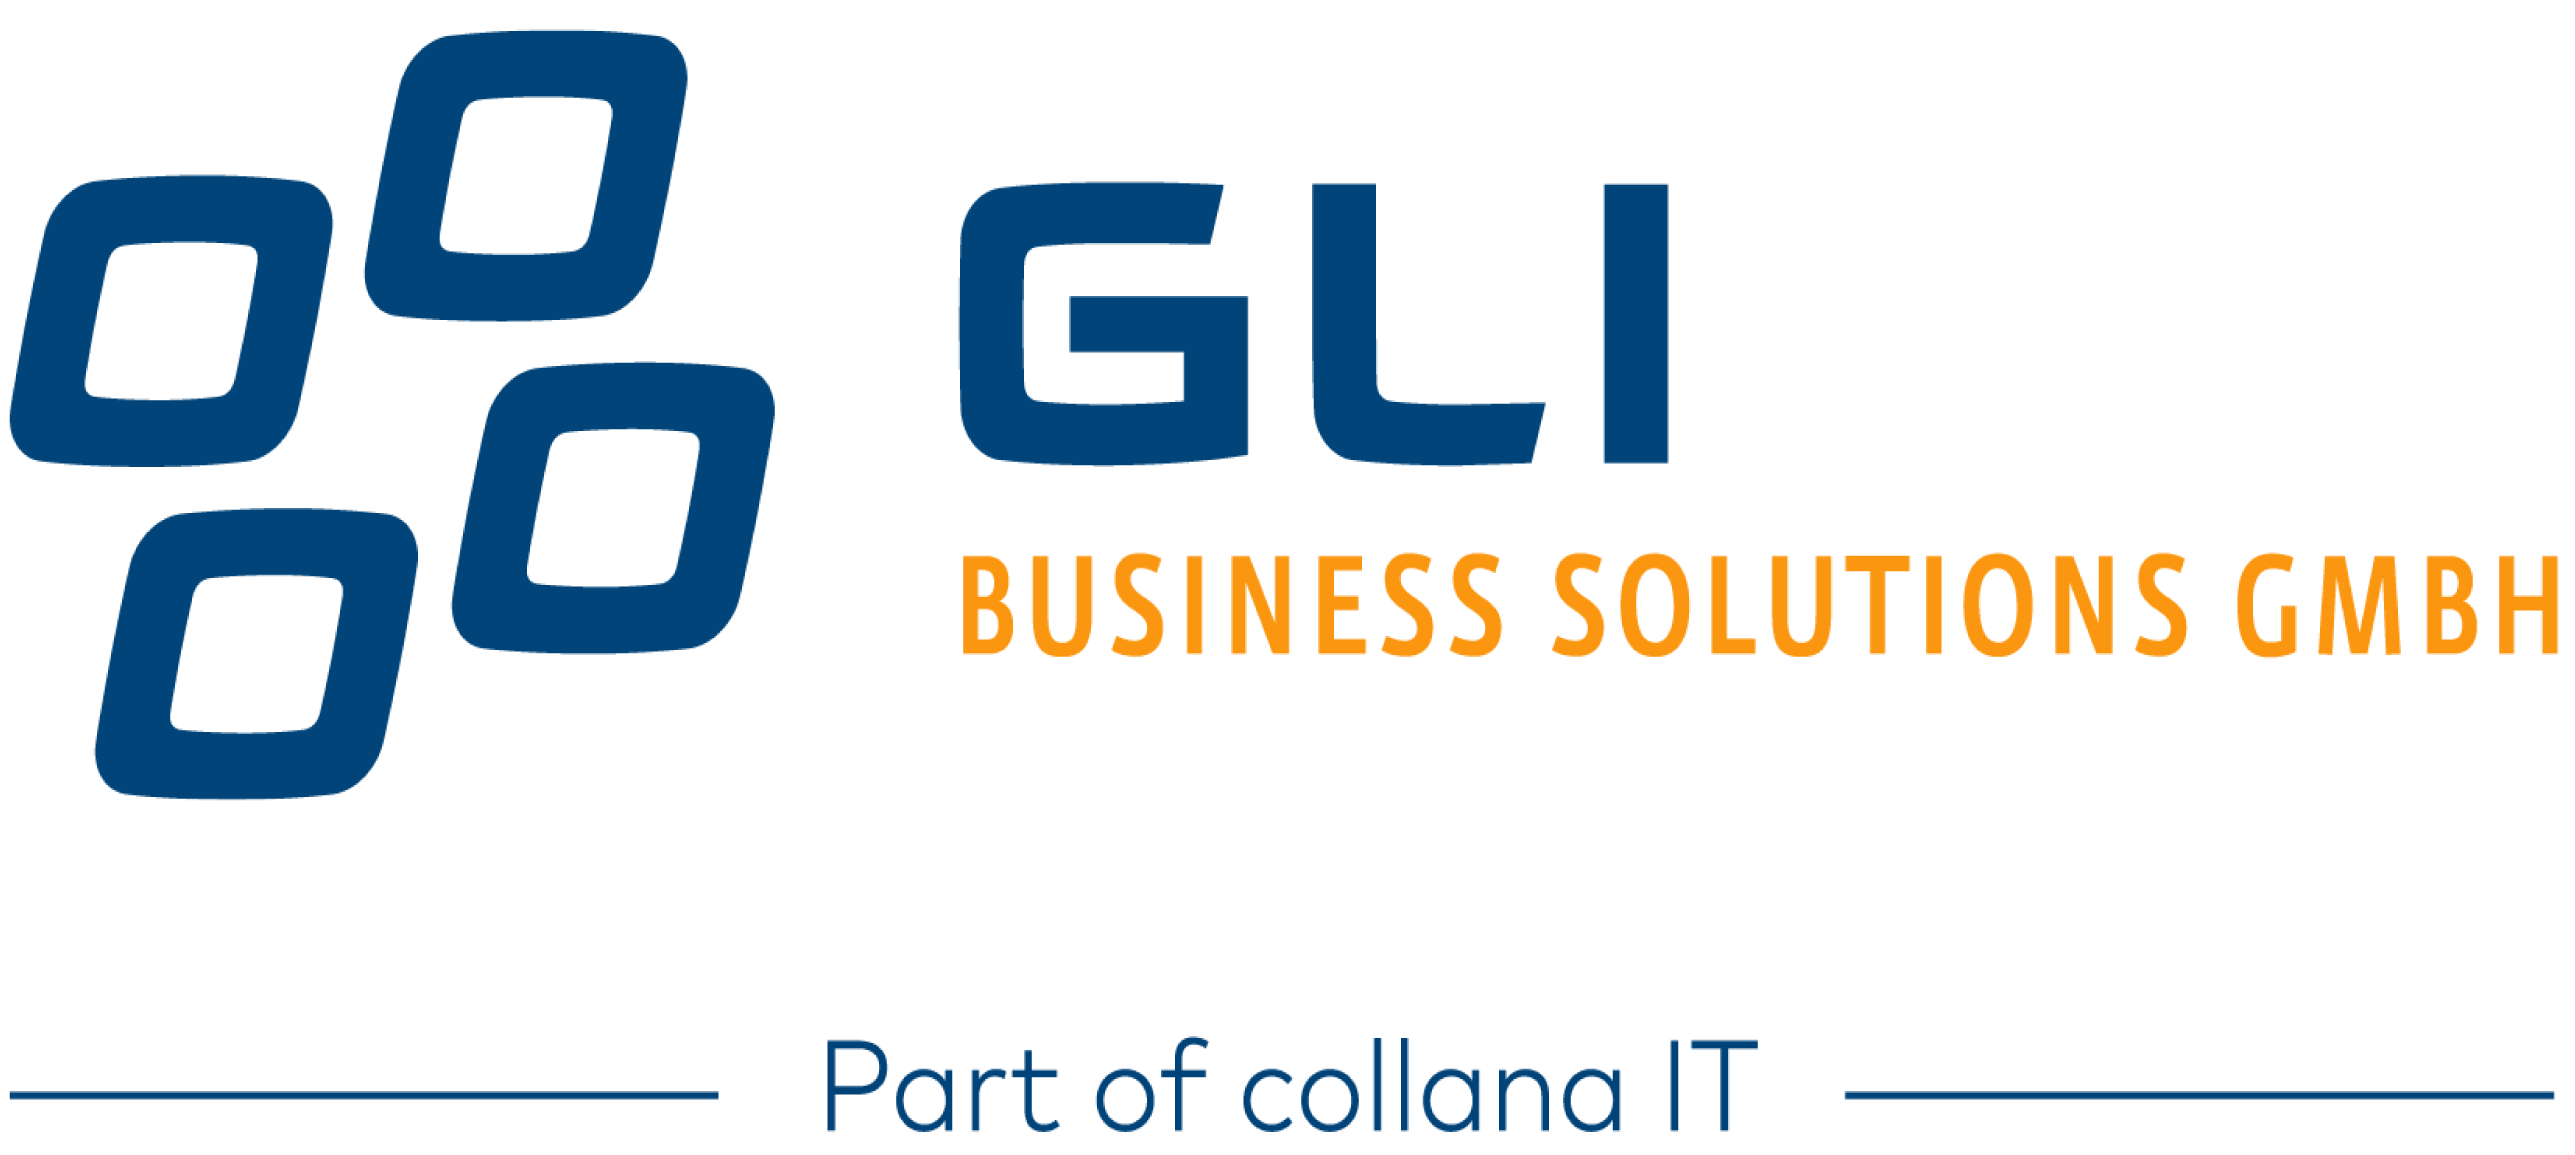 GLI Business Solutions GmbH